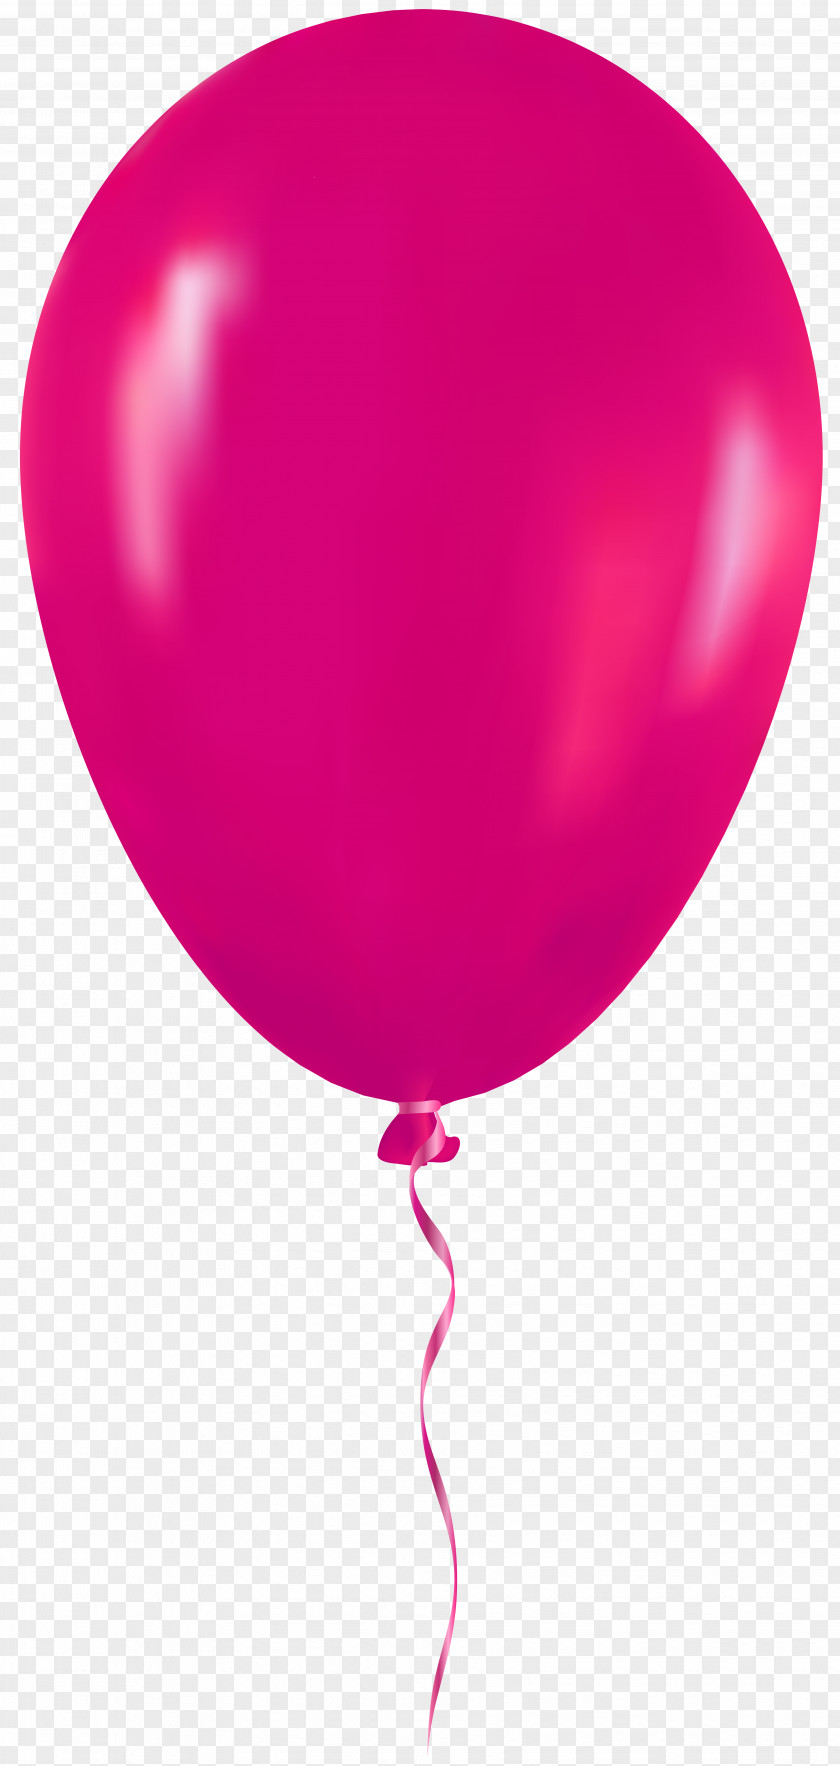 Balloon Free Clip Art PNG